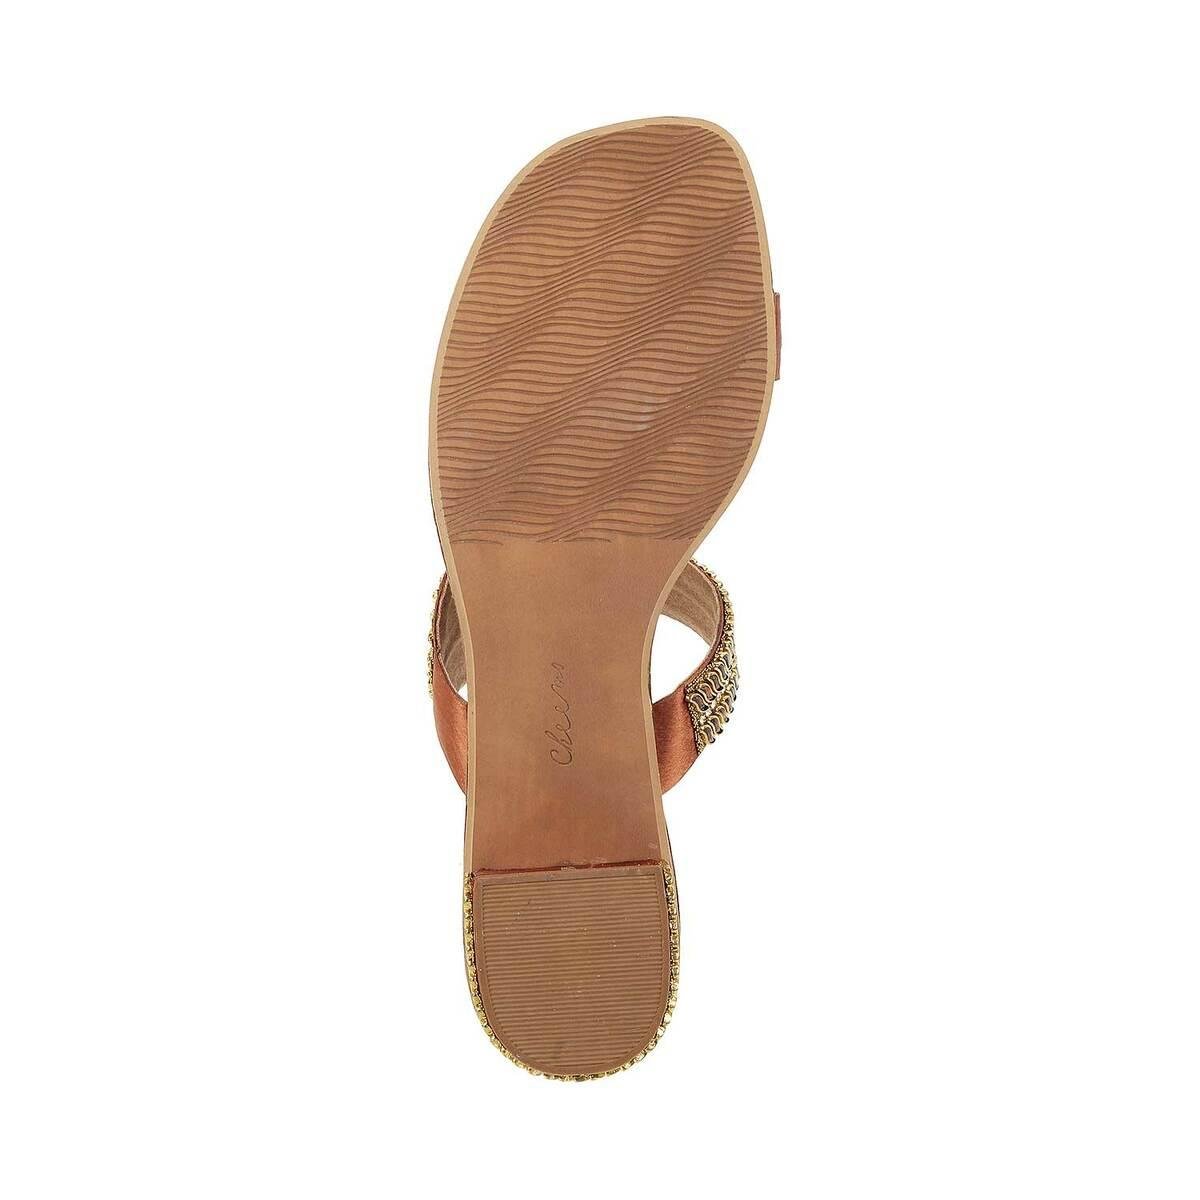 Buy Women Yellow Ethnic Slippers Online | SKU: 92-69-28-36-Metro Shoes